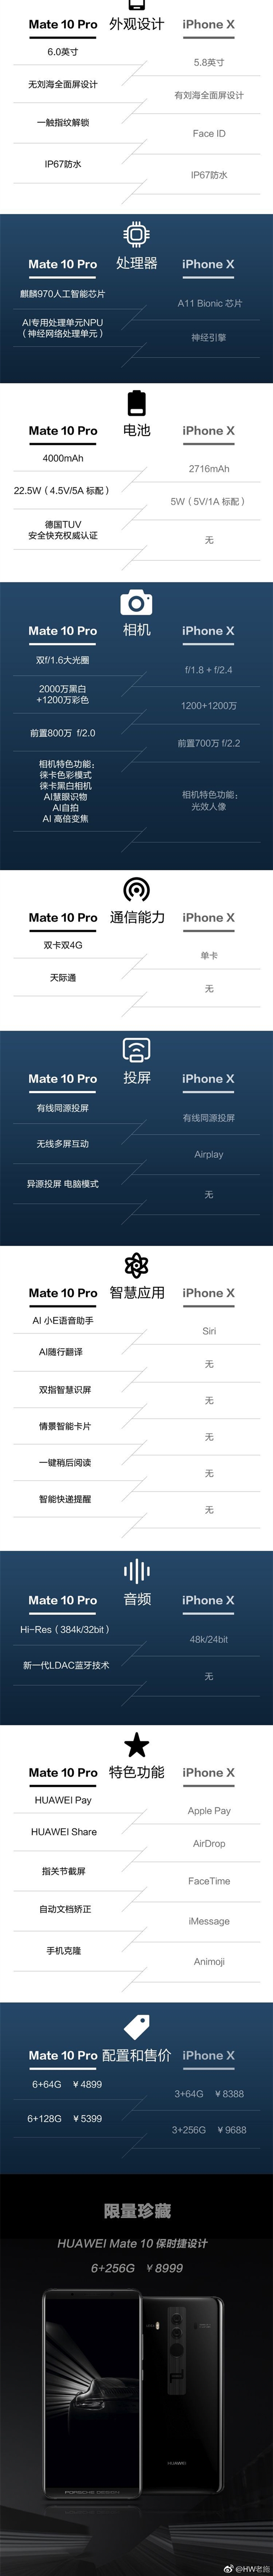 ԱMate 10 ProiPhone XΪ100%ѹ